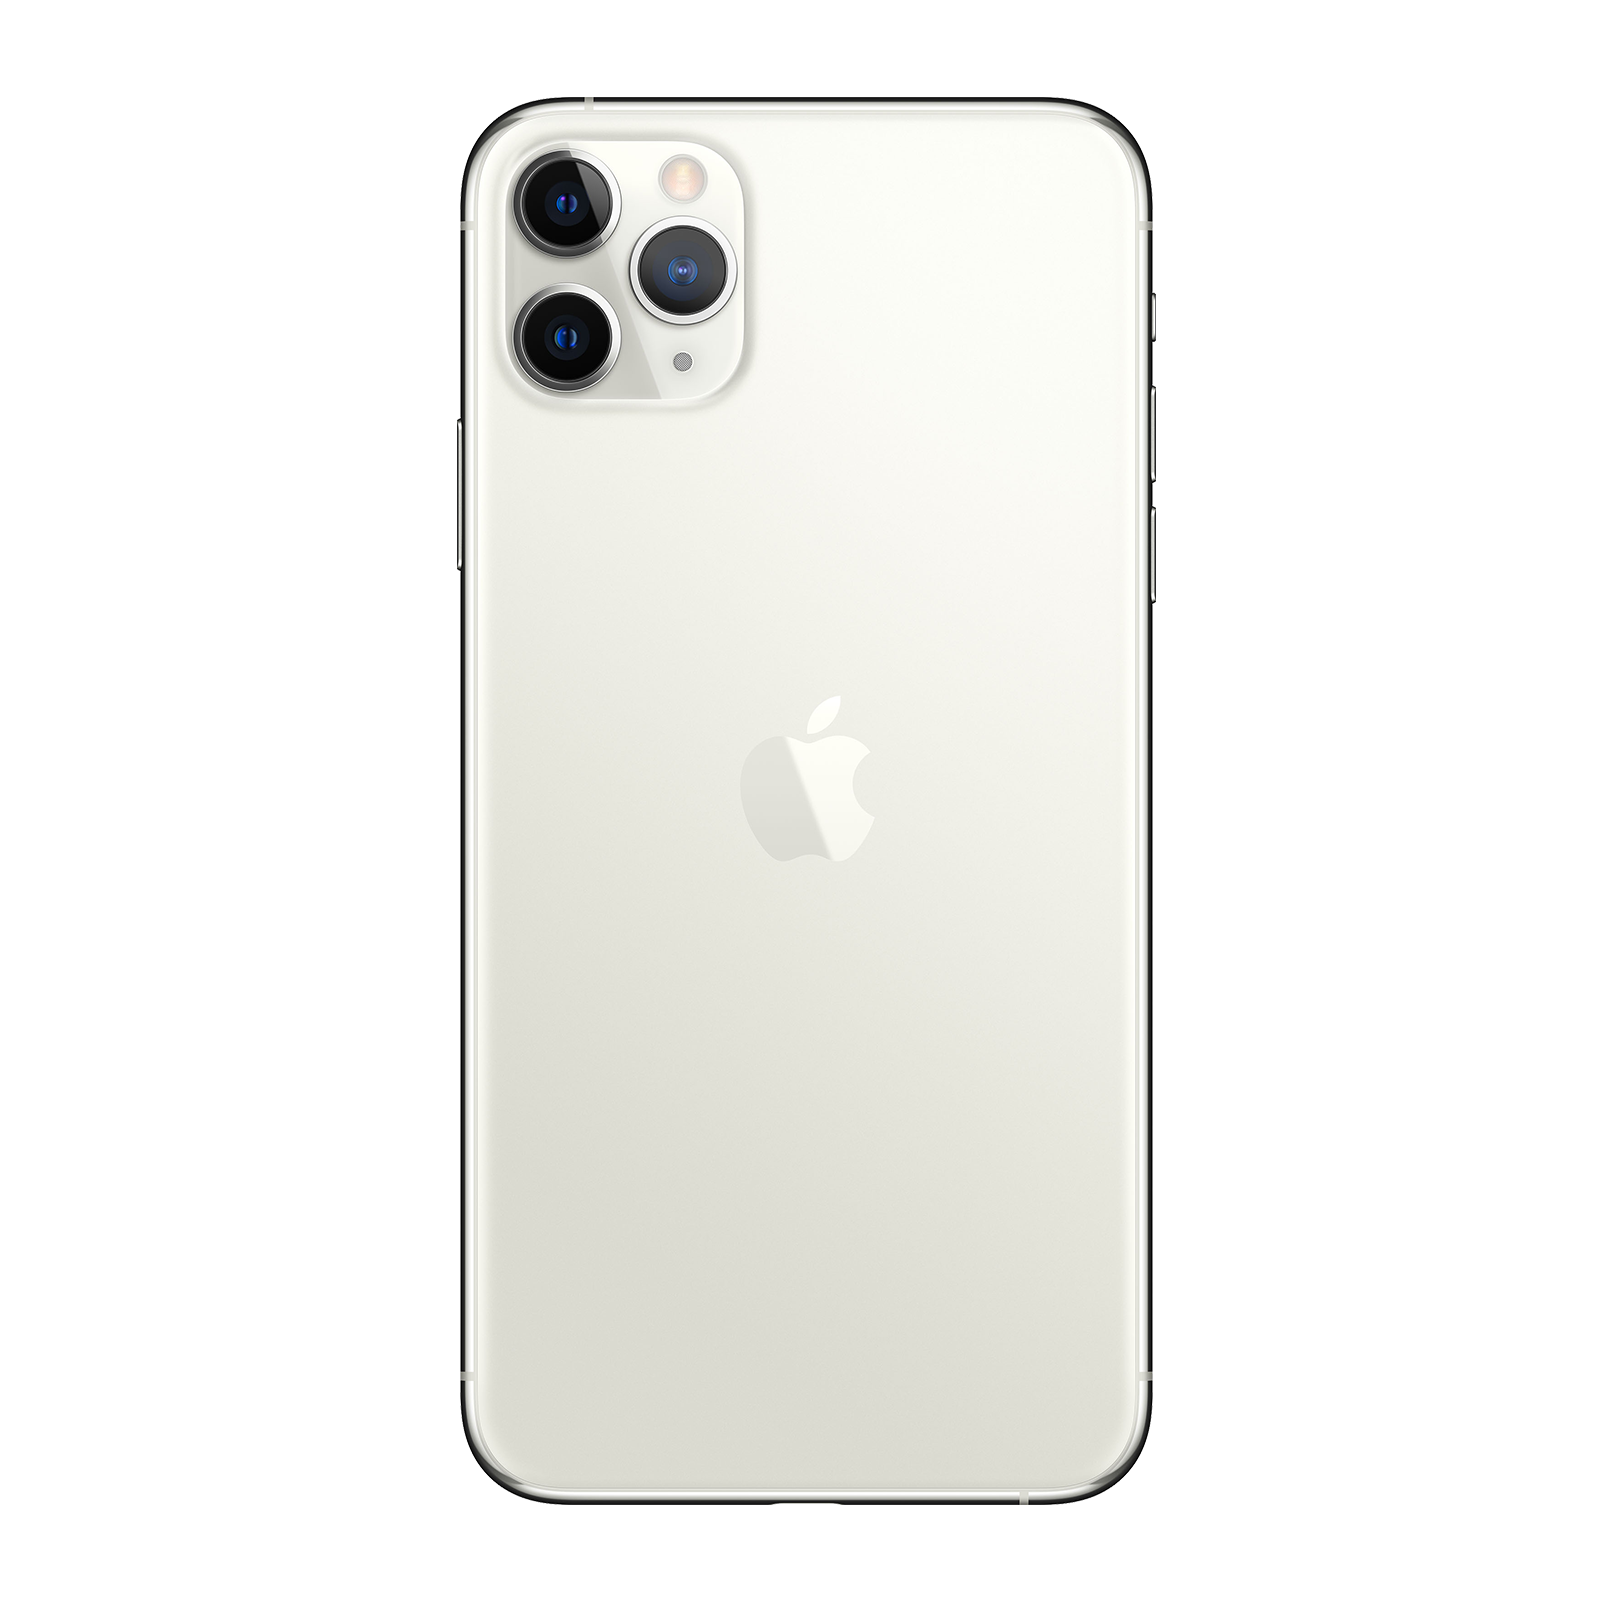 Apple iPhone 11 Pro Max 256GB Silver Pristine - Unlocked